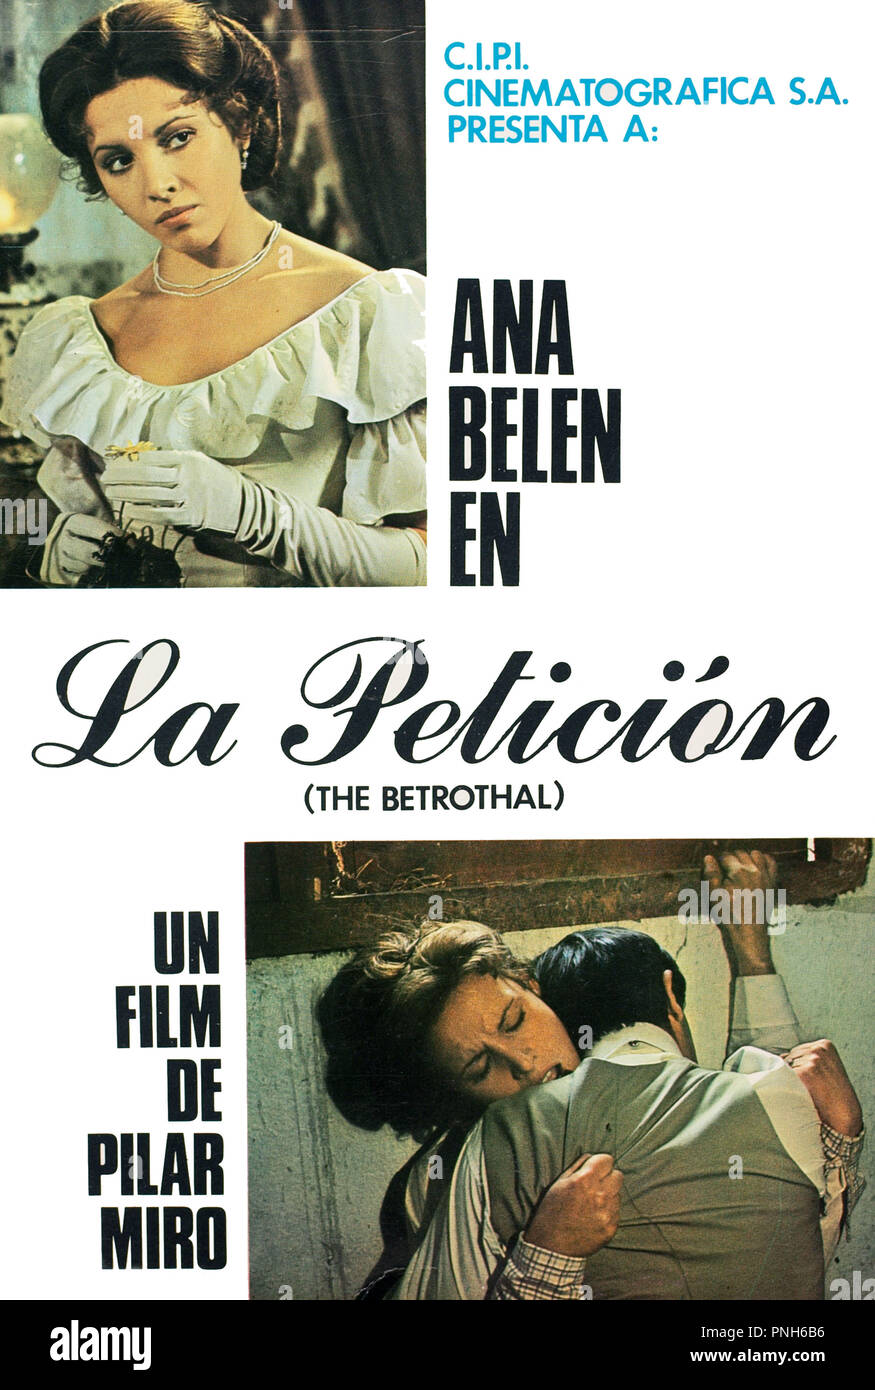 Original film title: LA PETICION. English title: THE REQUEST. Year: 1976. Director: PILAR MIRO. Credit: CIPI / Album Stock Photo